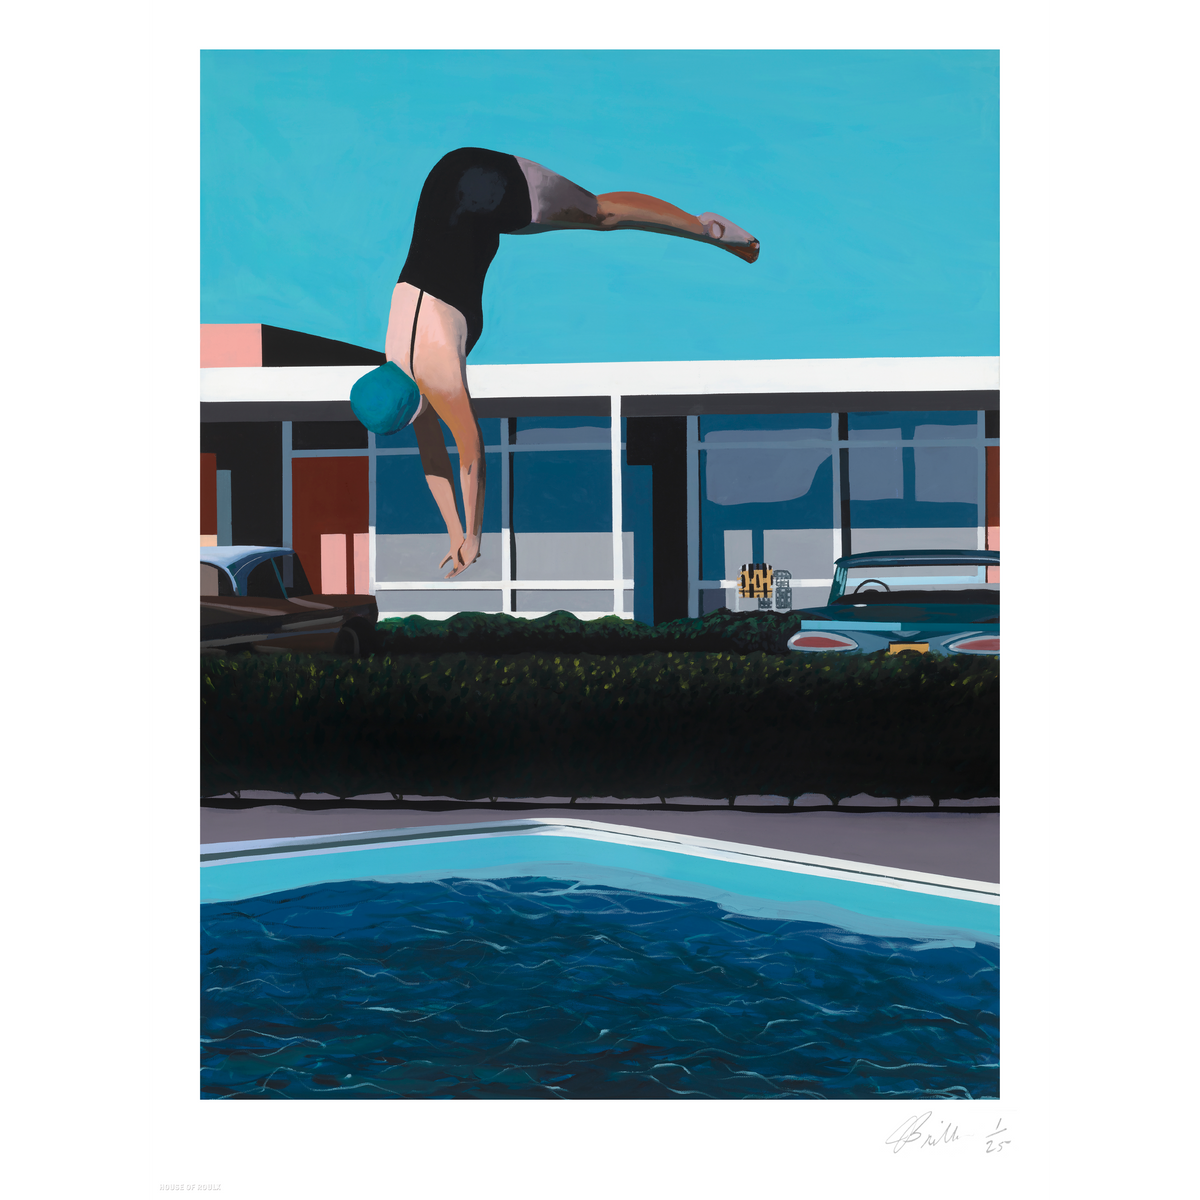 Jessica Brilli &quot;Motel Pool&quot; - Archival Print, Limited Edition of 25 - 18 x 24&quot;